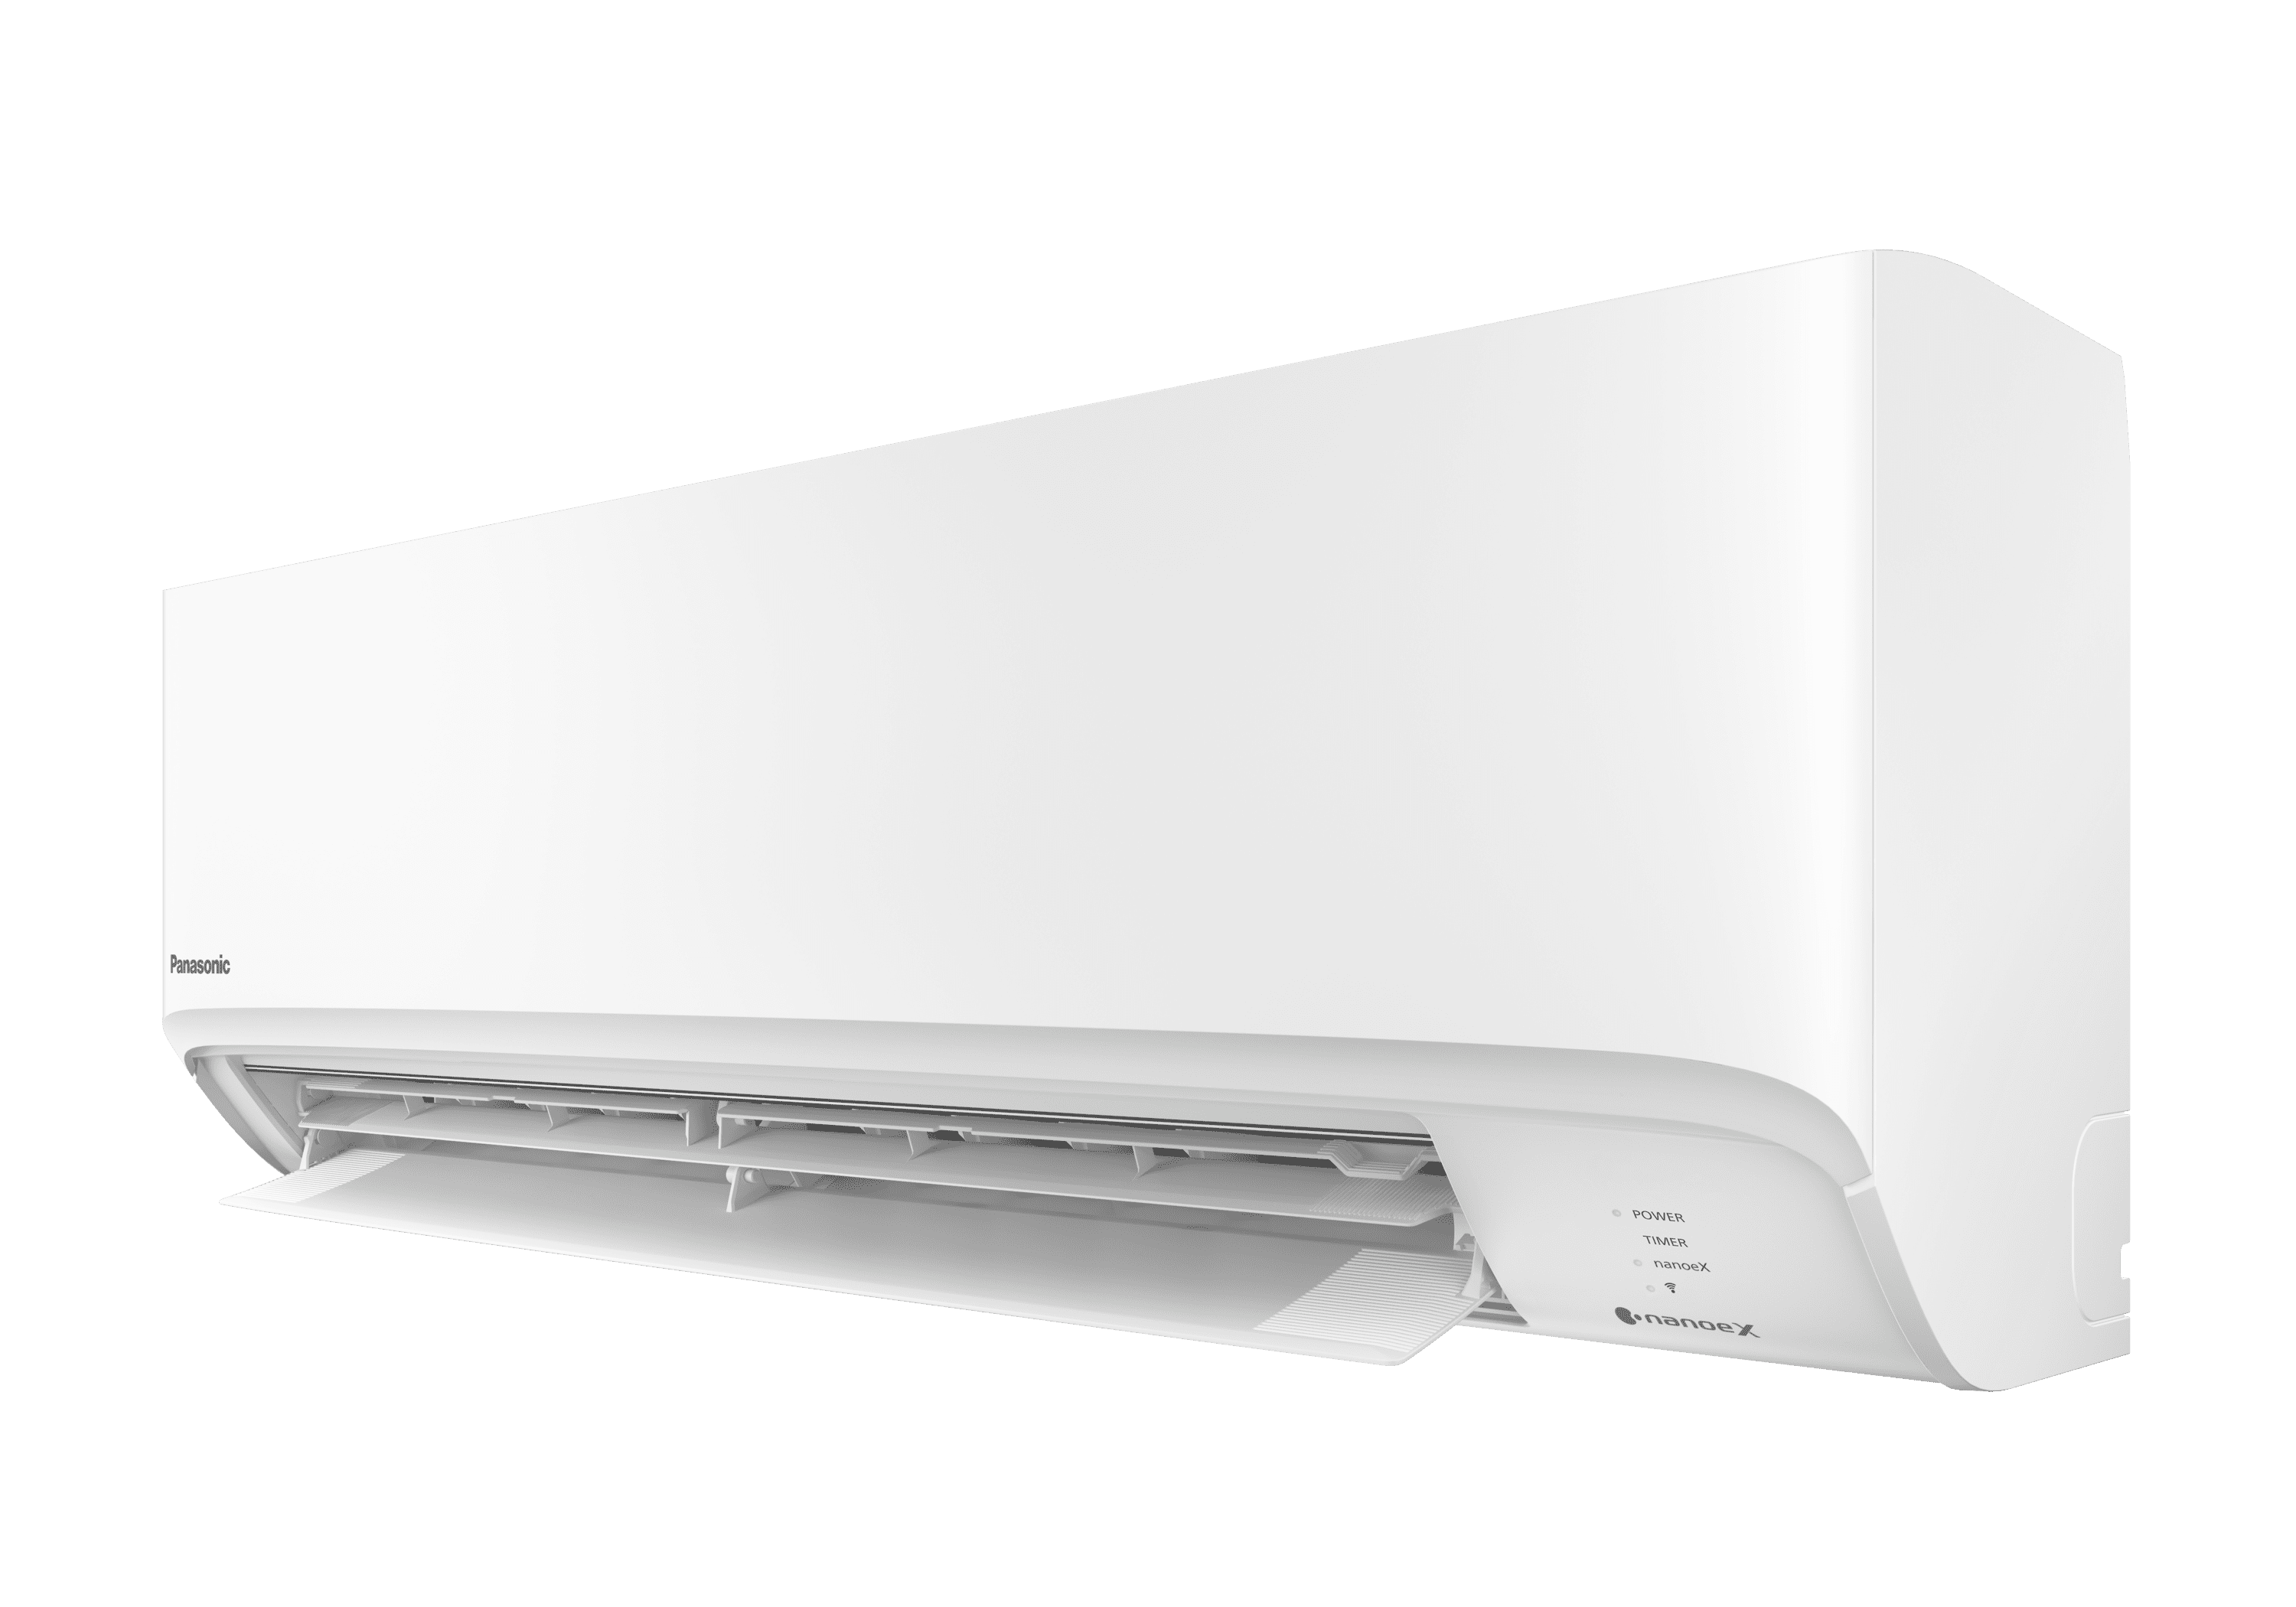 Panasonic aero series heat pump